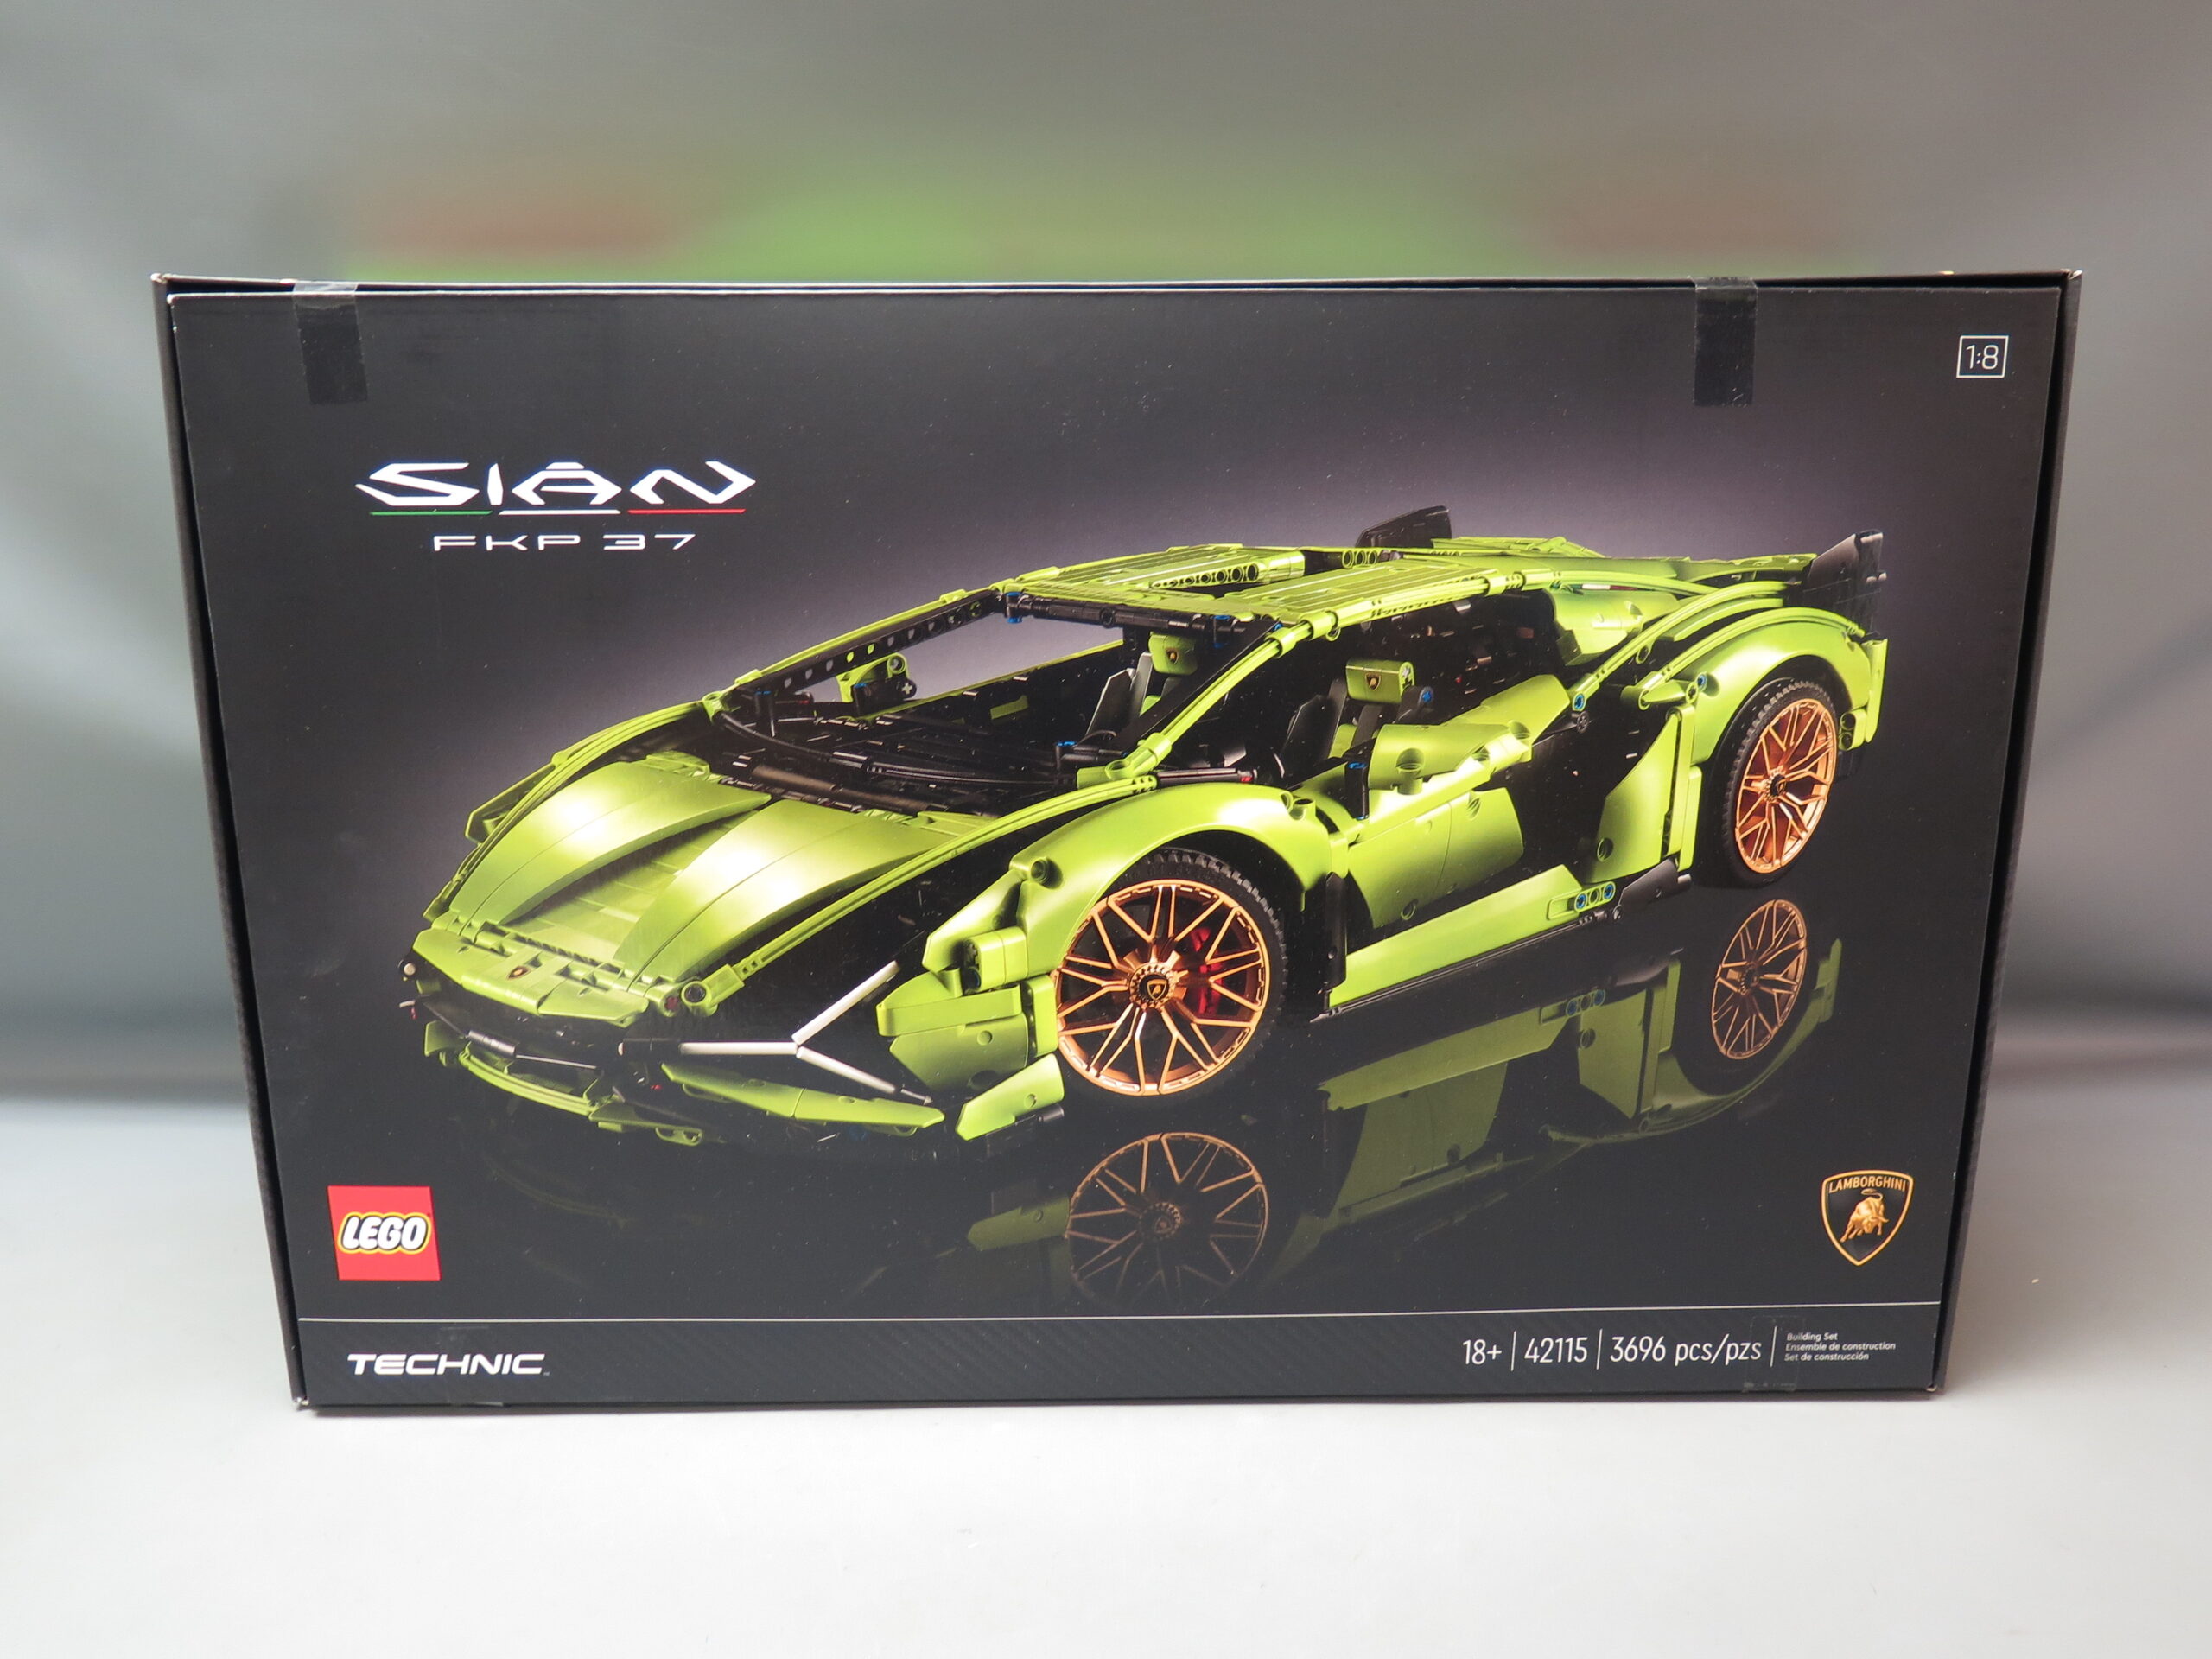 Lego Technic Lamborghini Sian Fkp 42115